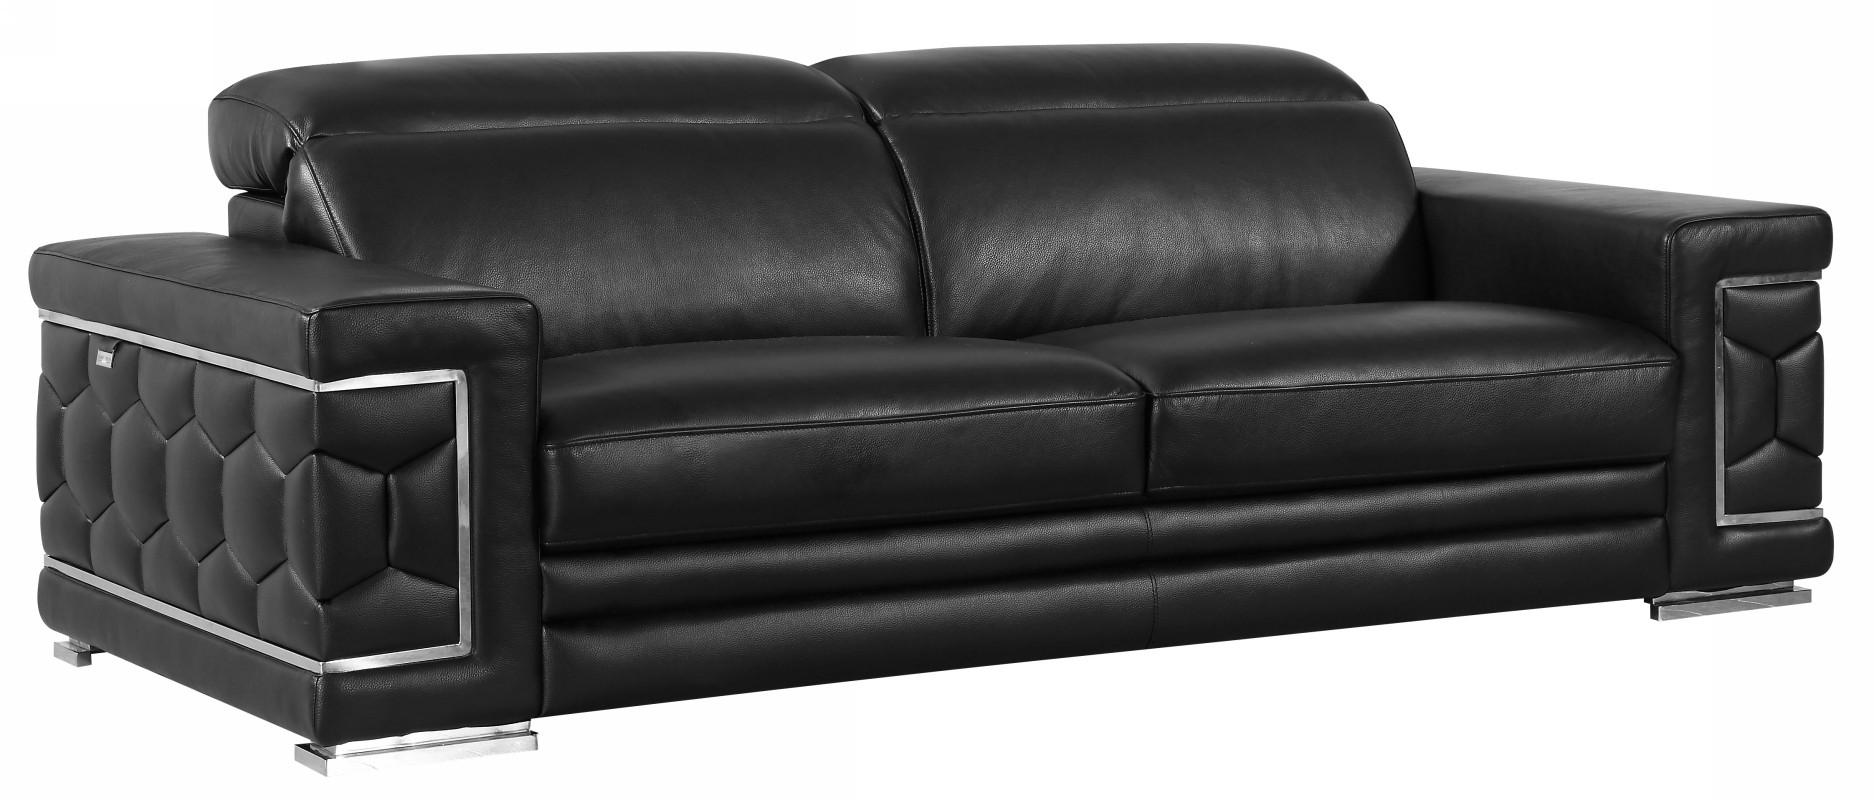 

    
Hawkesbury Common Luxury Italian Upholstered Complete Leather 3 Piece Living Room Set Black
